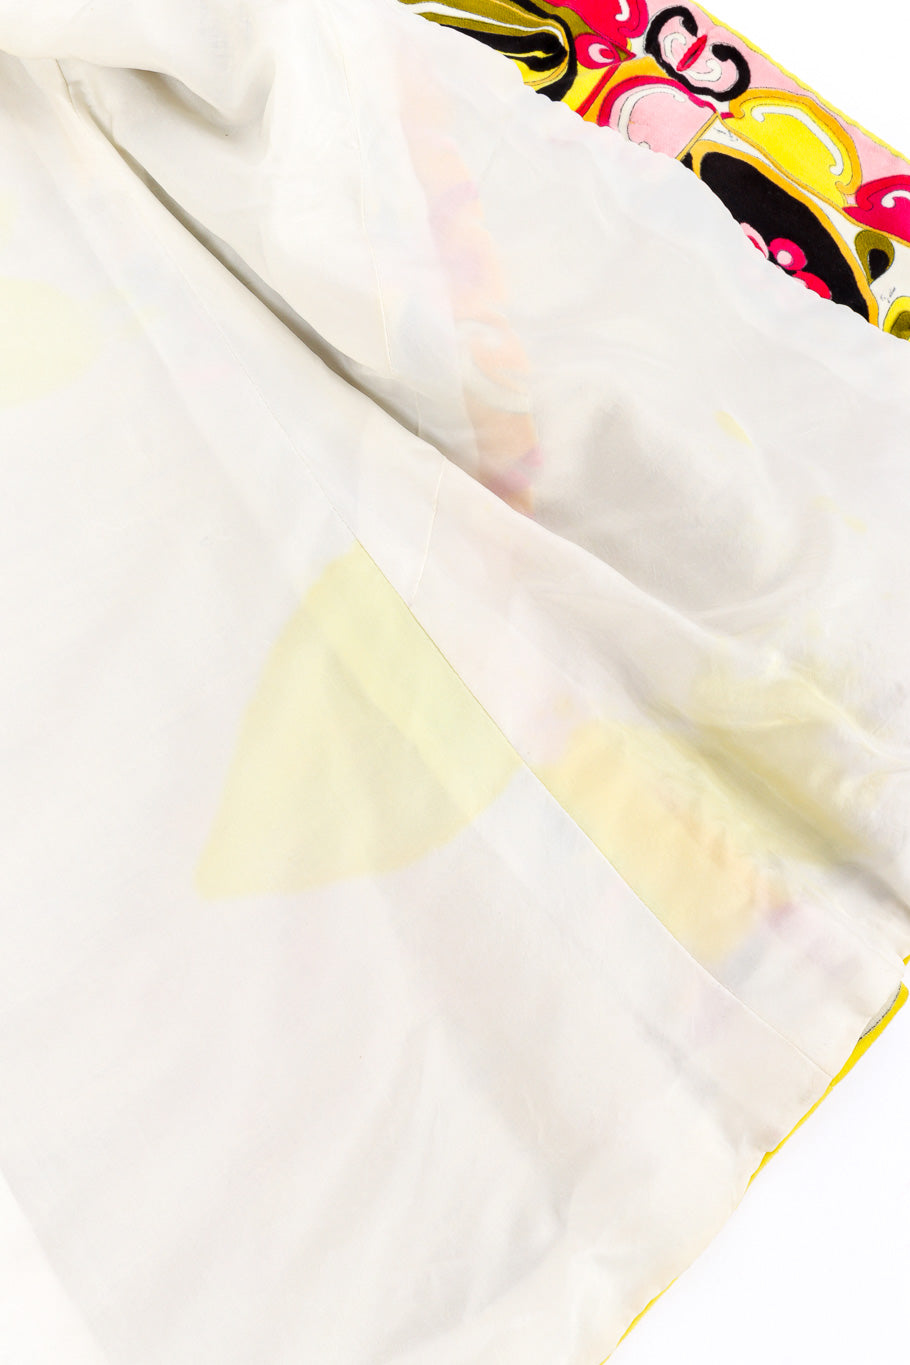 Mod floral pantsuit by Emilio Pucci lining stain @recessla